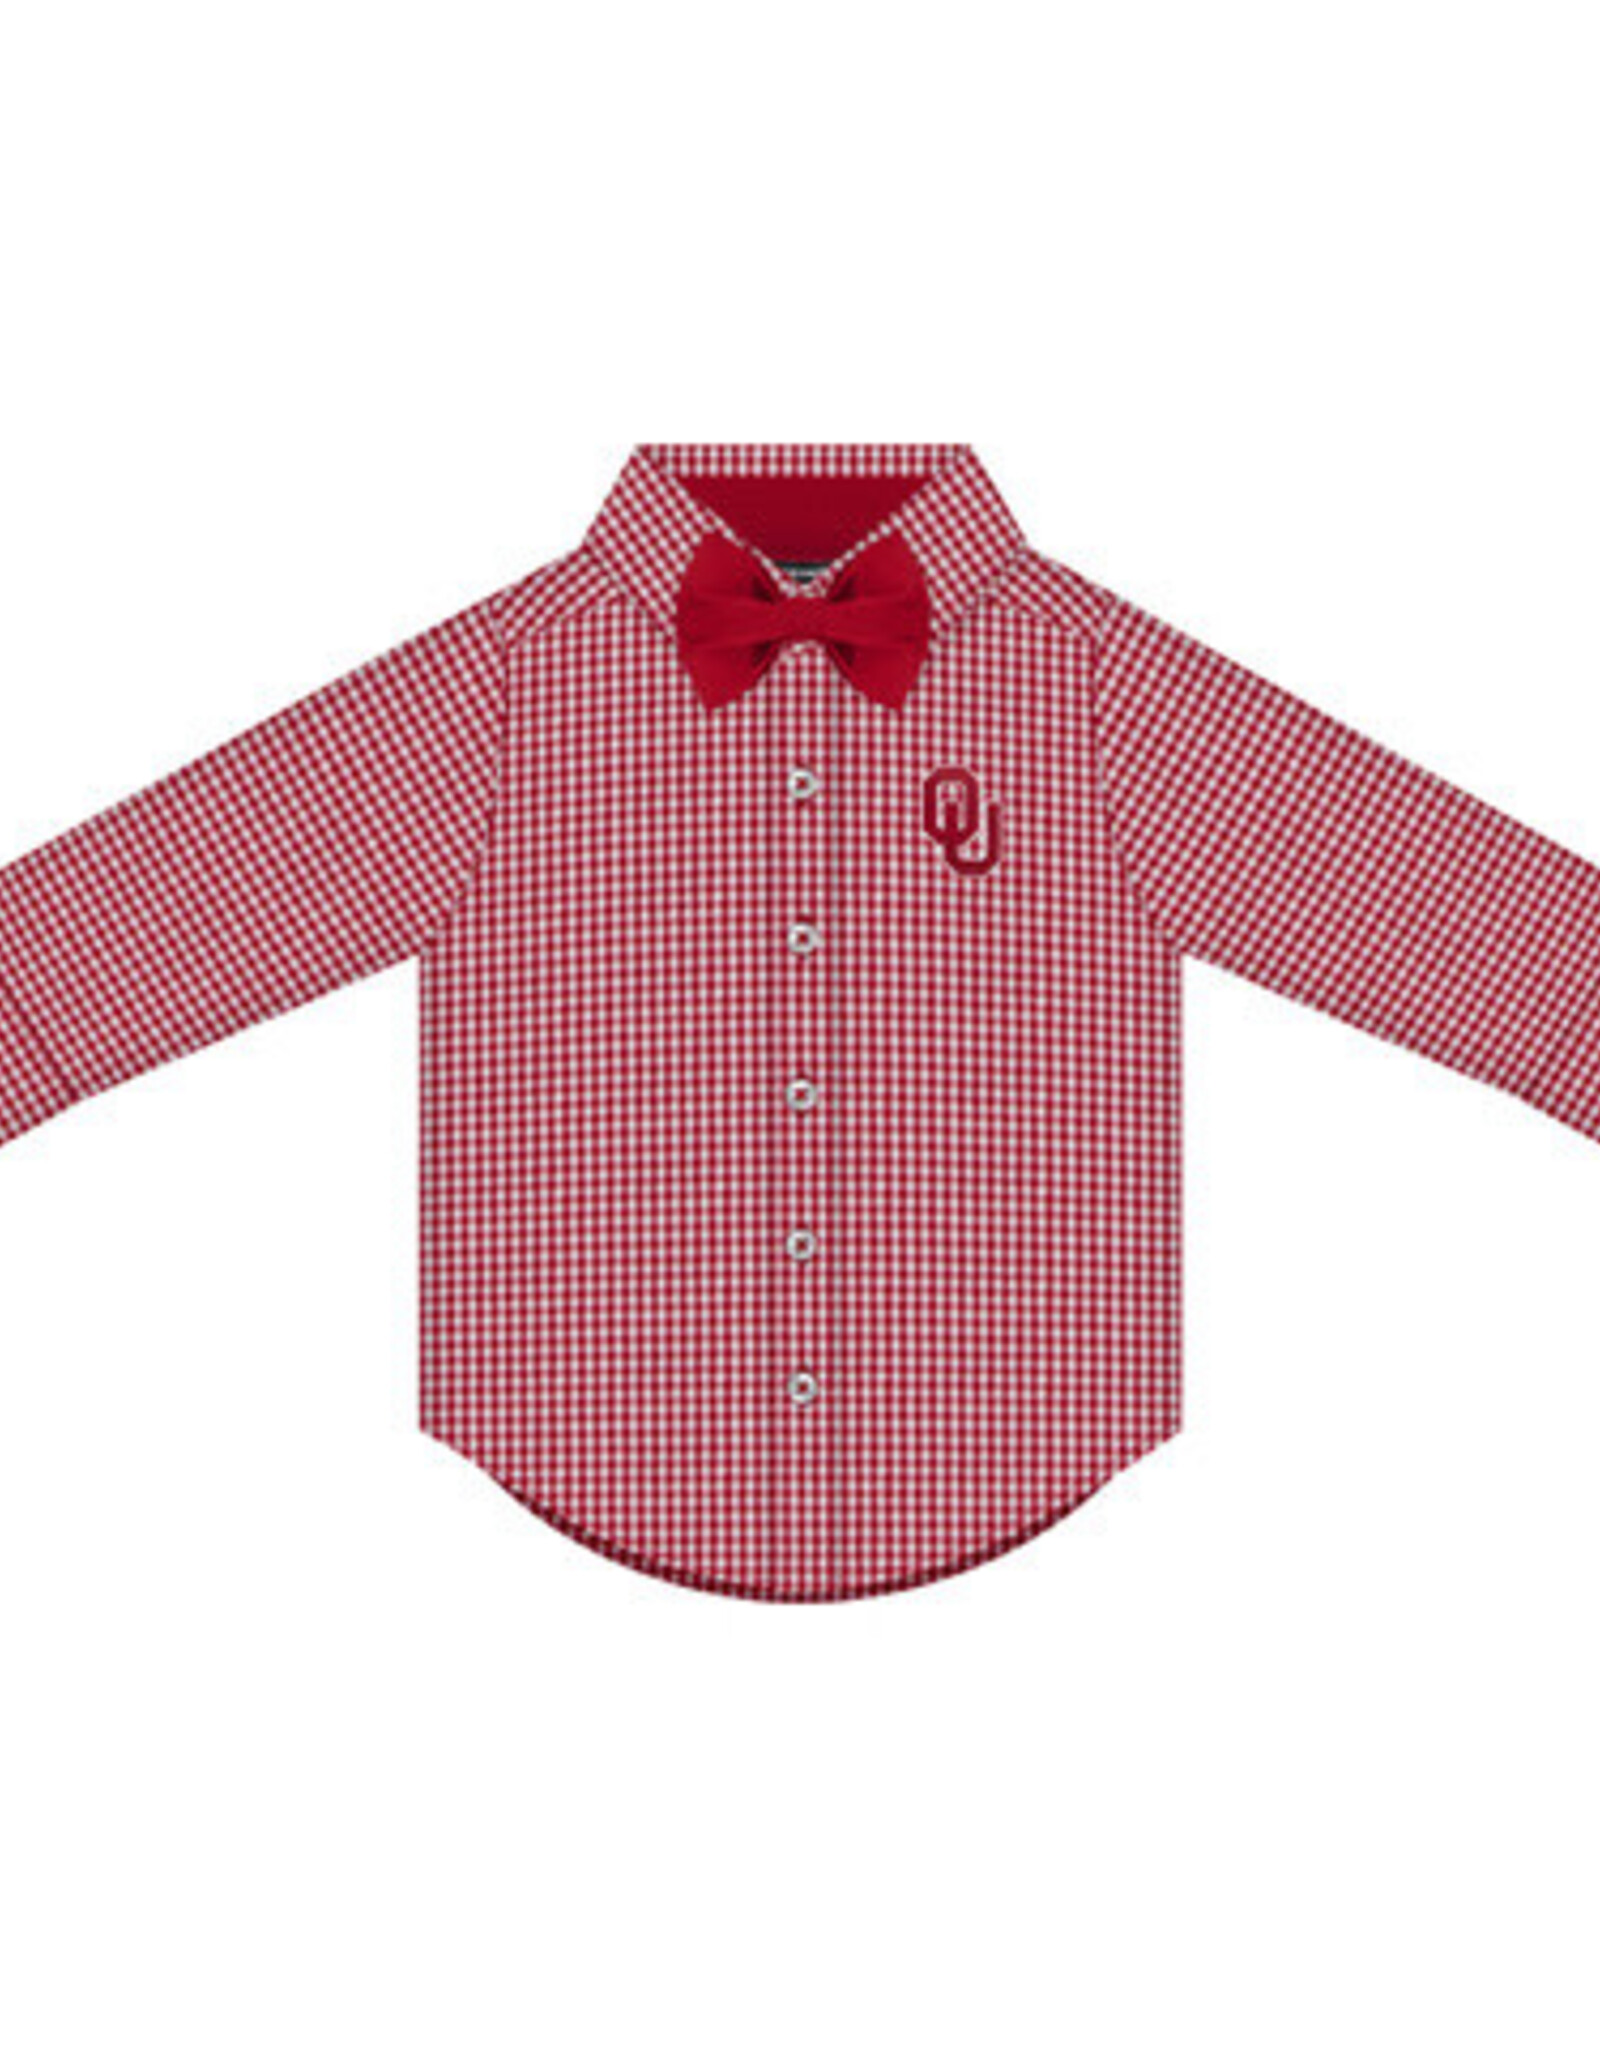 Creative Knitwear Toddler OU Gingham Shirt w/ Bowtie